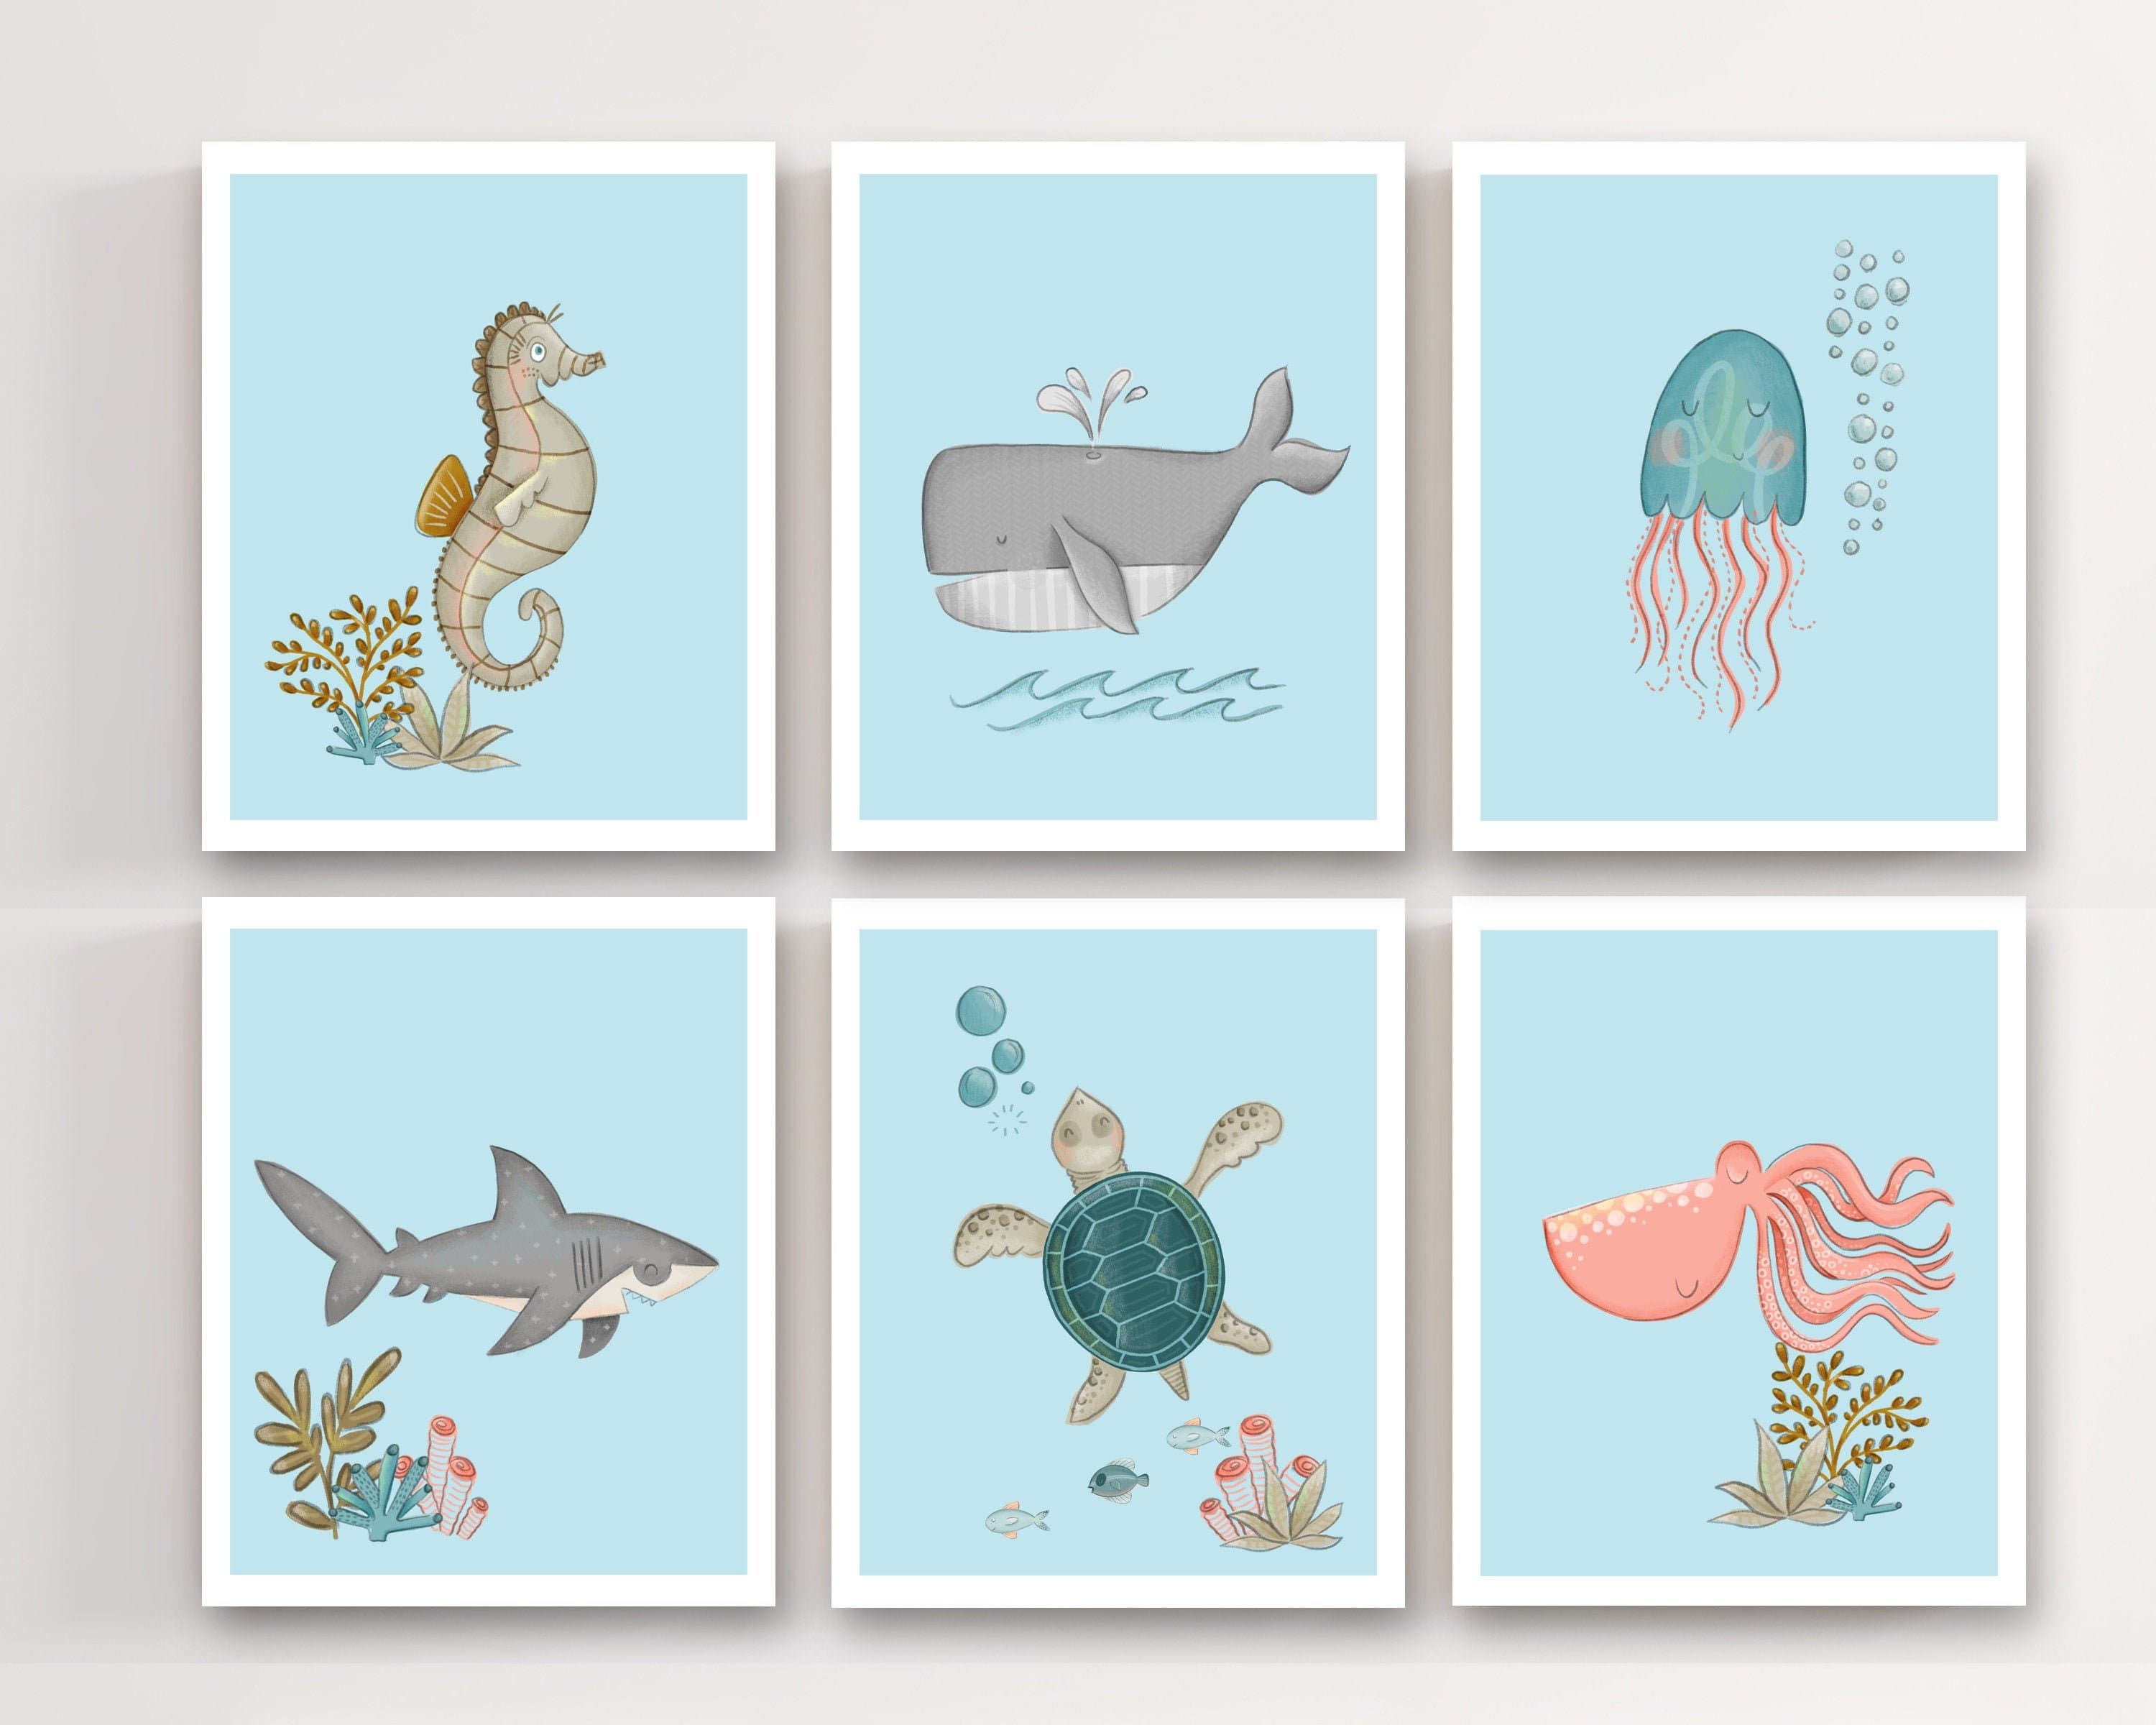 Ocean nursery decor  - Under the sea nursery - Sea animal prints - Ocean printable art - Nautical nursery decor - Sea creature prints -H2055 nursery art print baby nursery bedroom decor